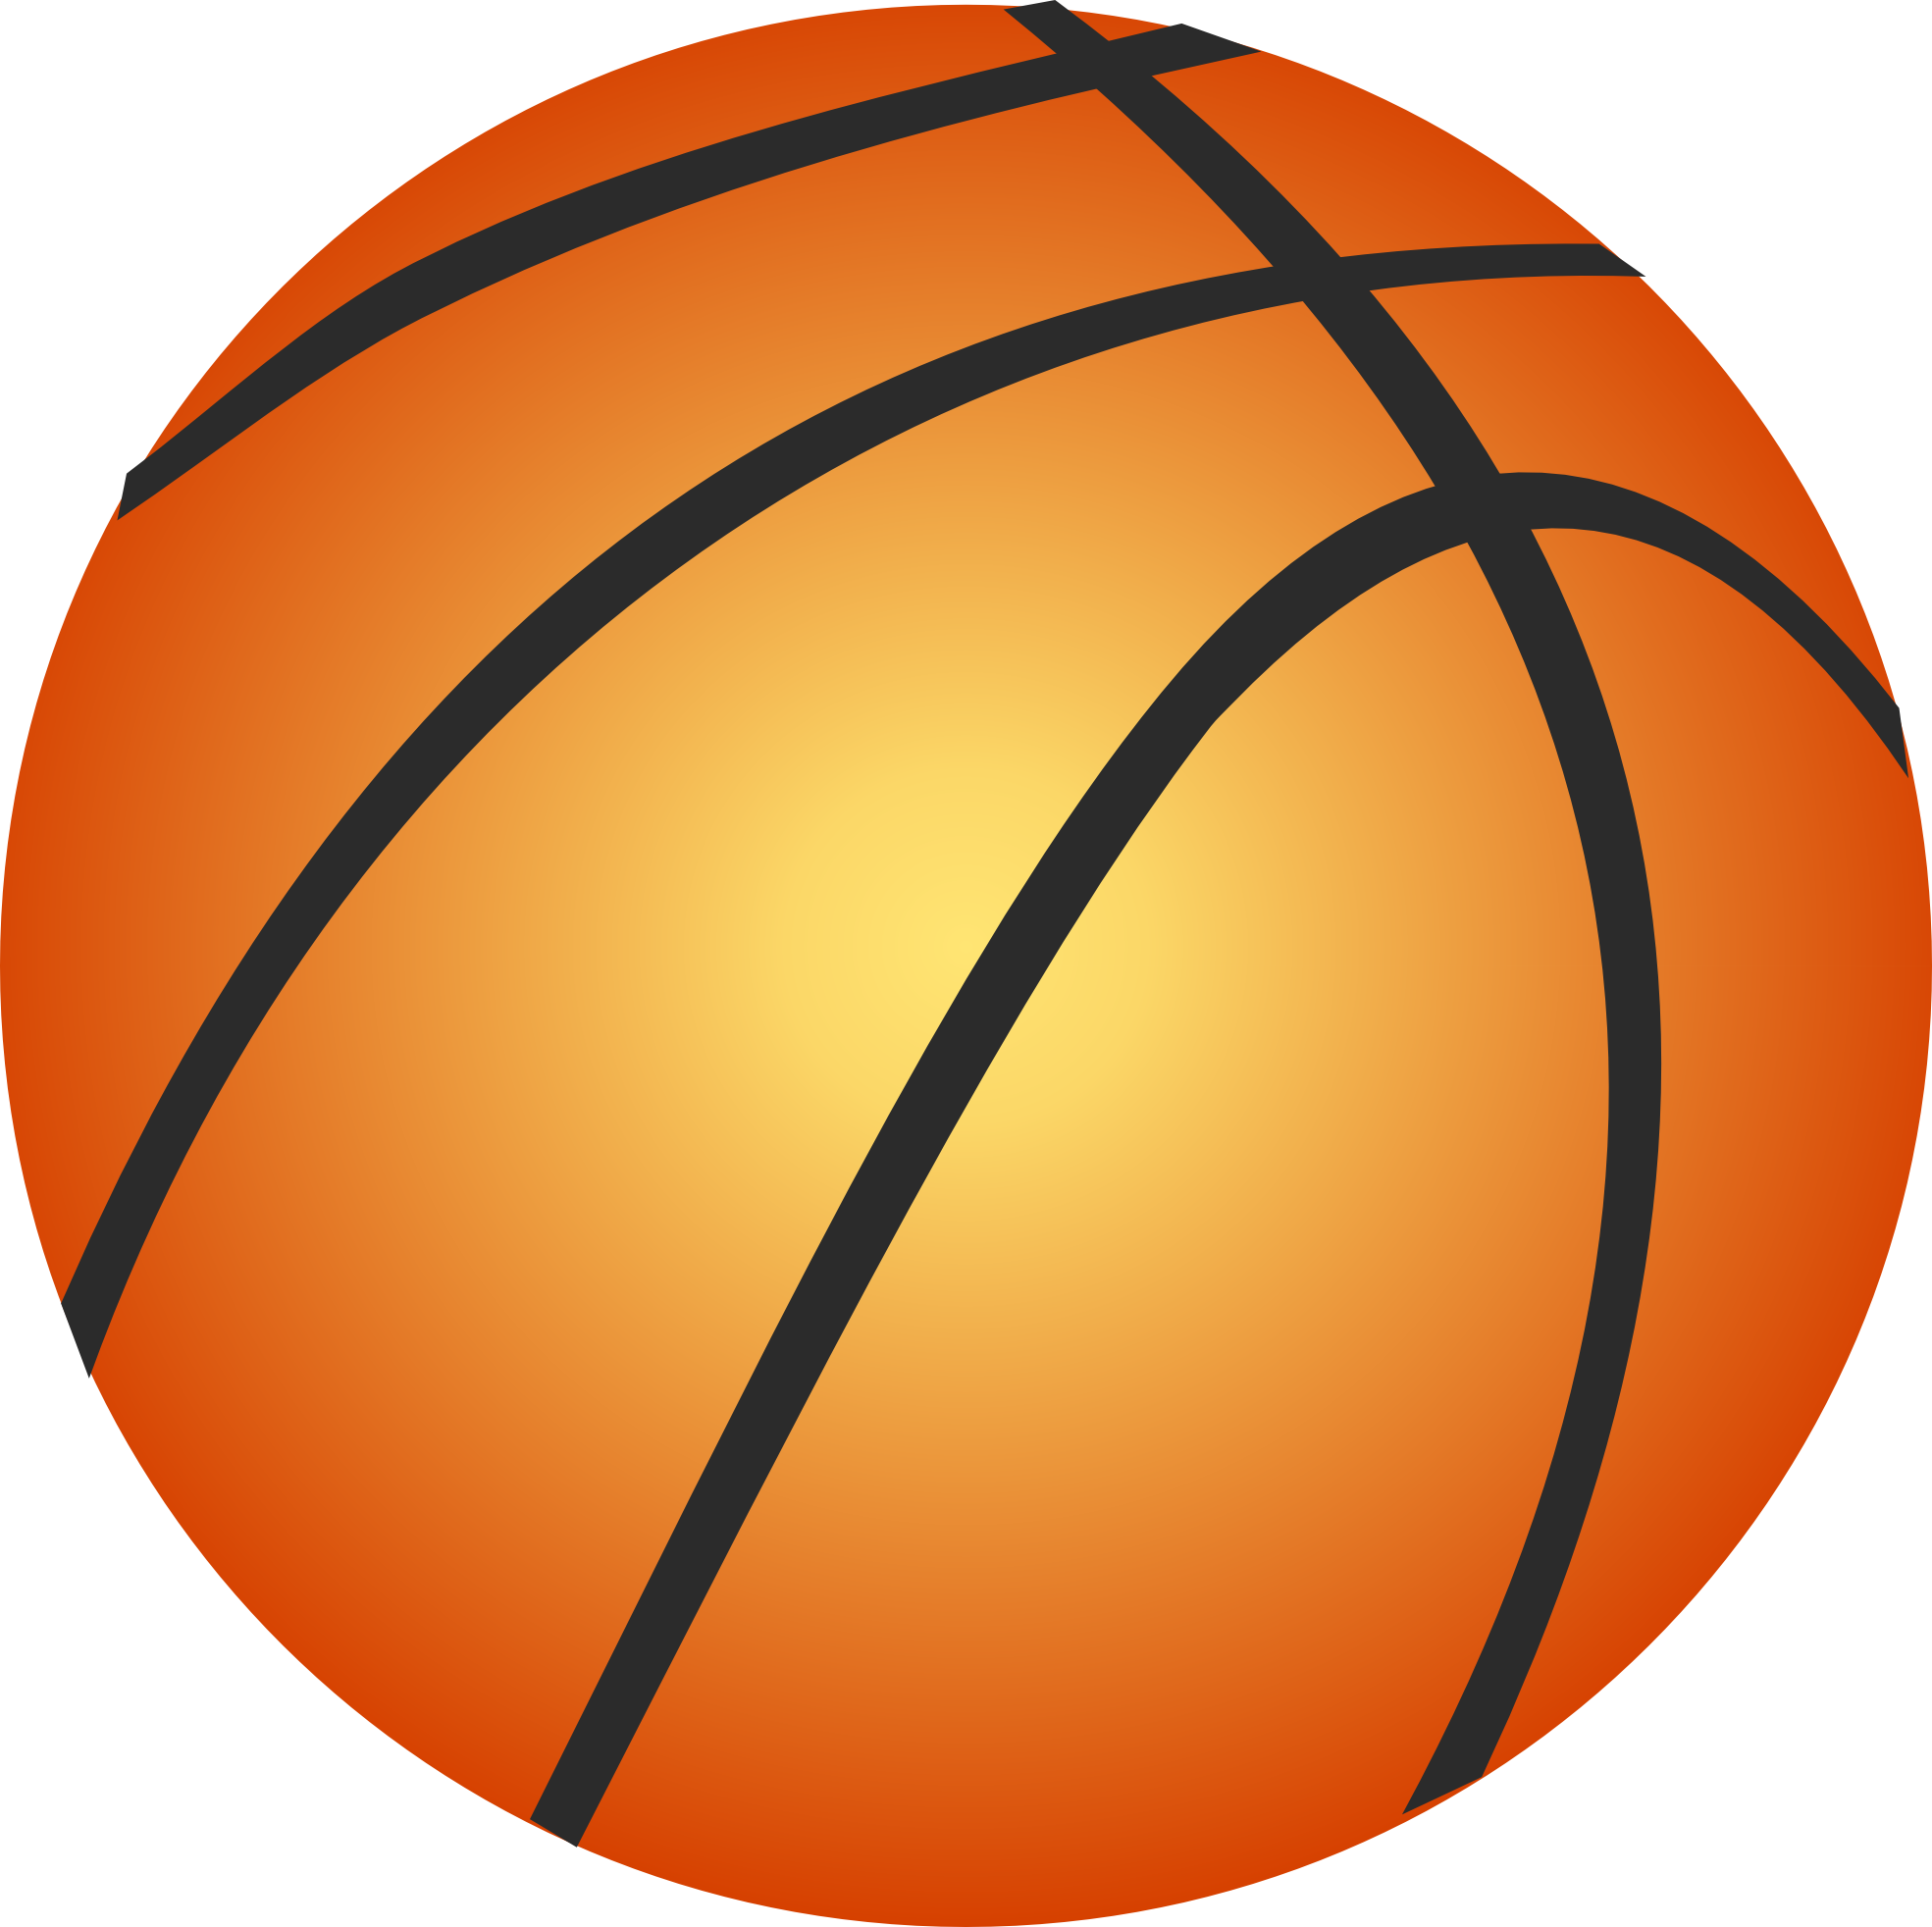 Cartoon basketball clipart